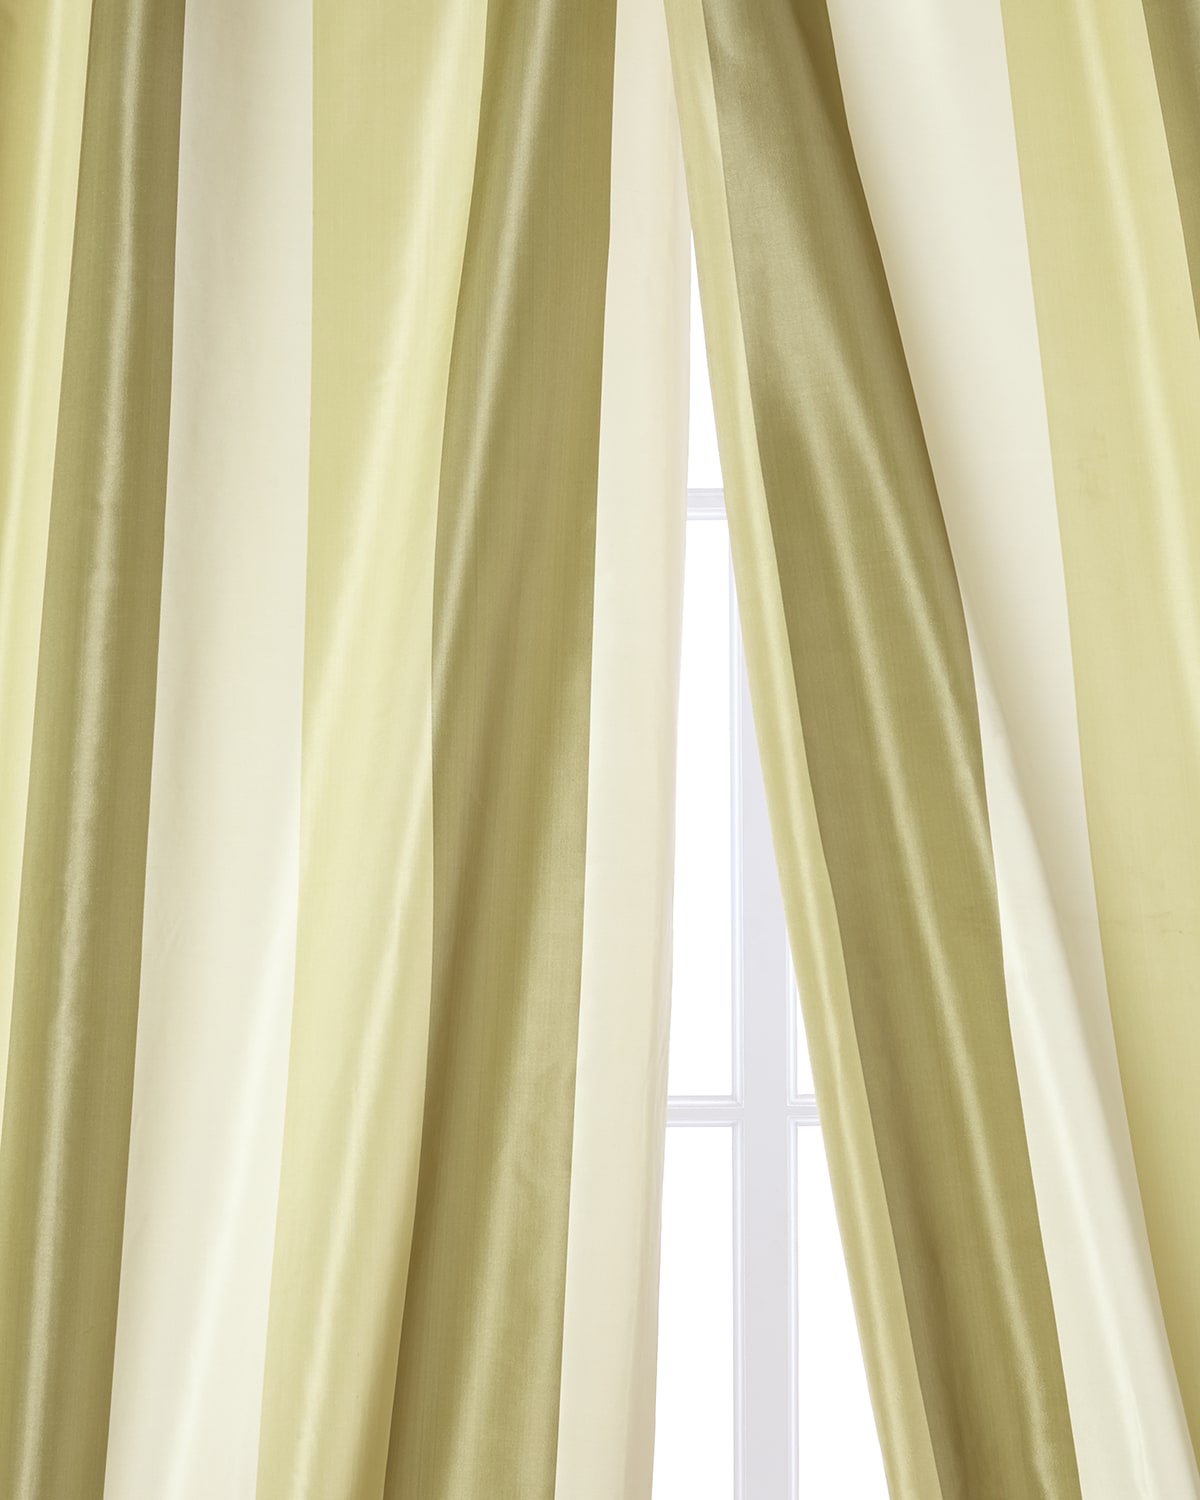 100% Silk taffeta striped lined drapes Hampton by Neiman Marcus Pair 